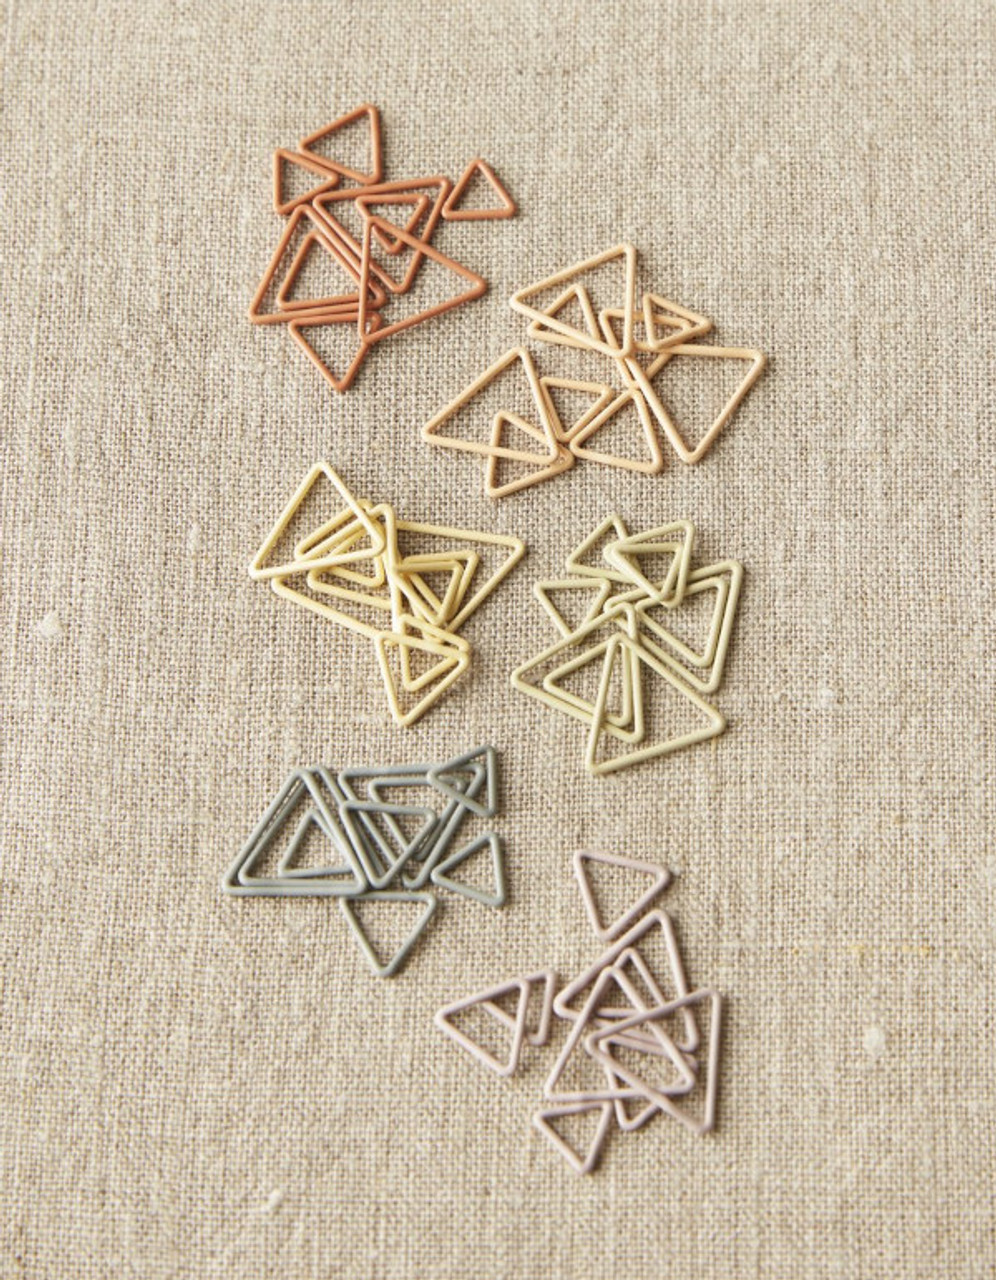 Clover Small Stitch Markers Triangle